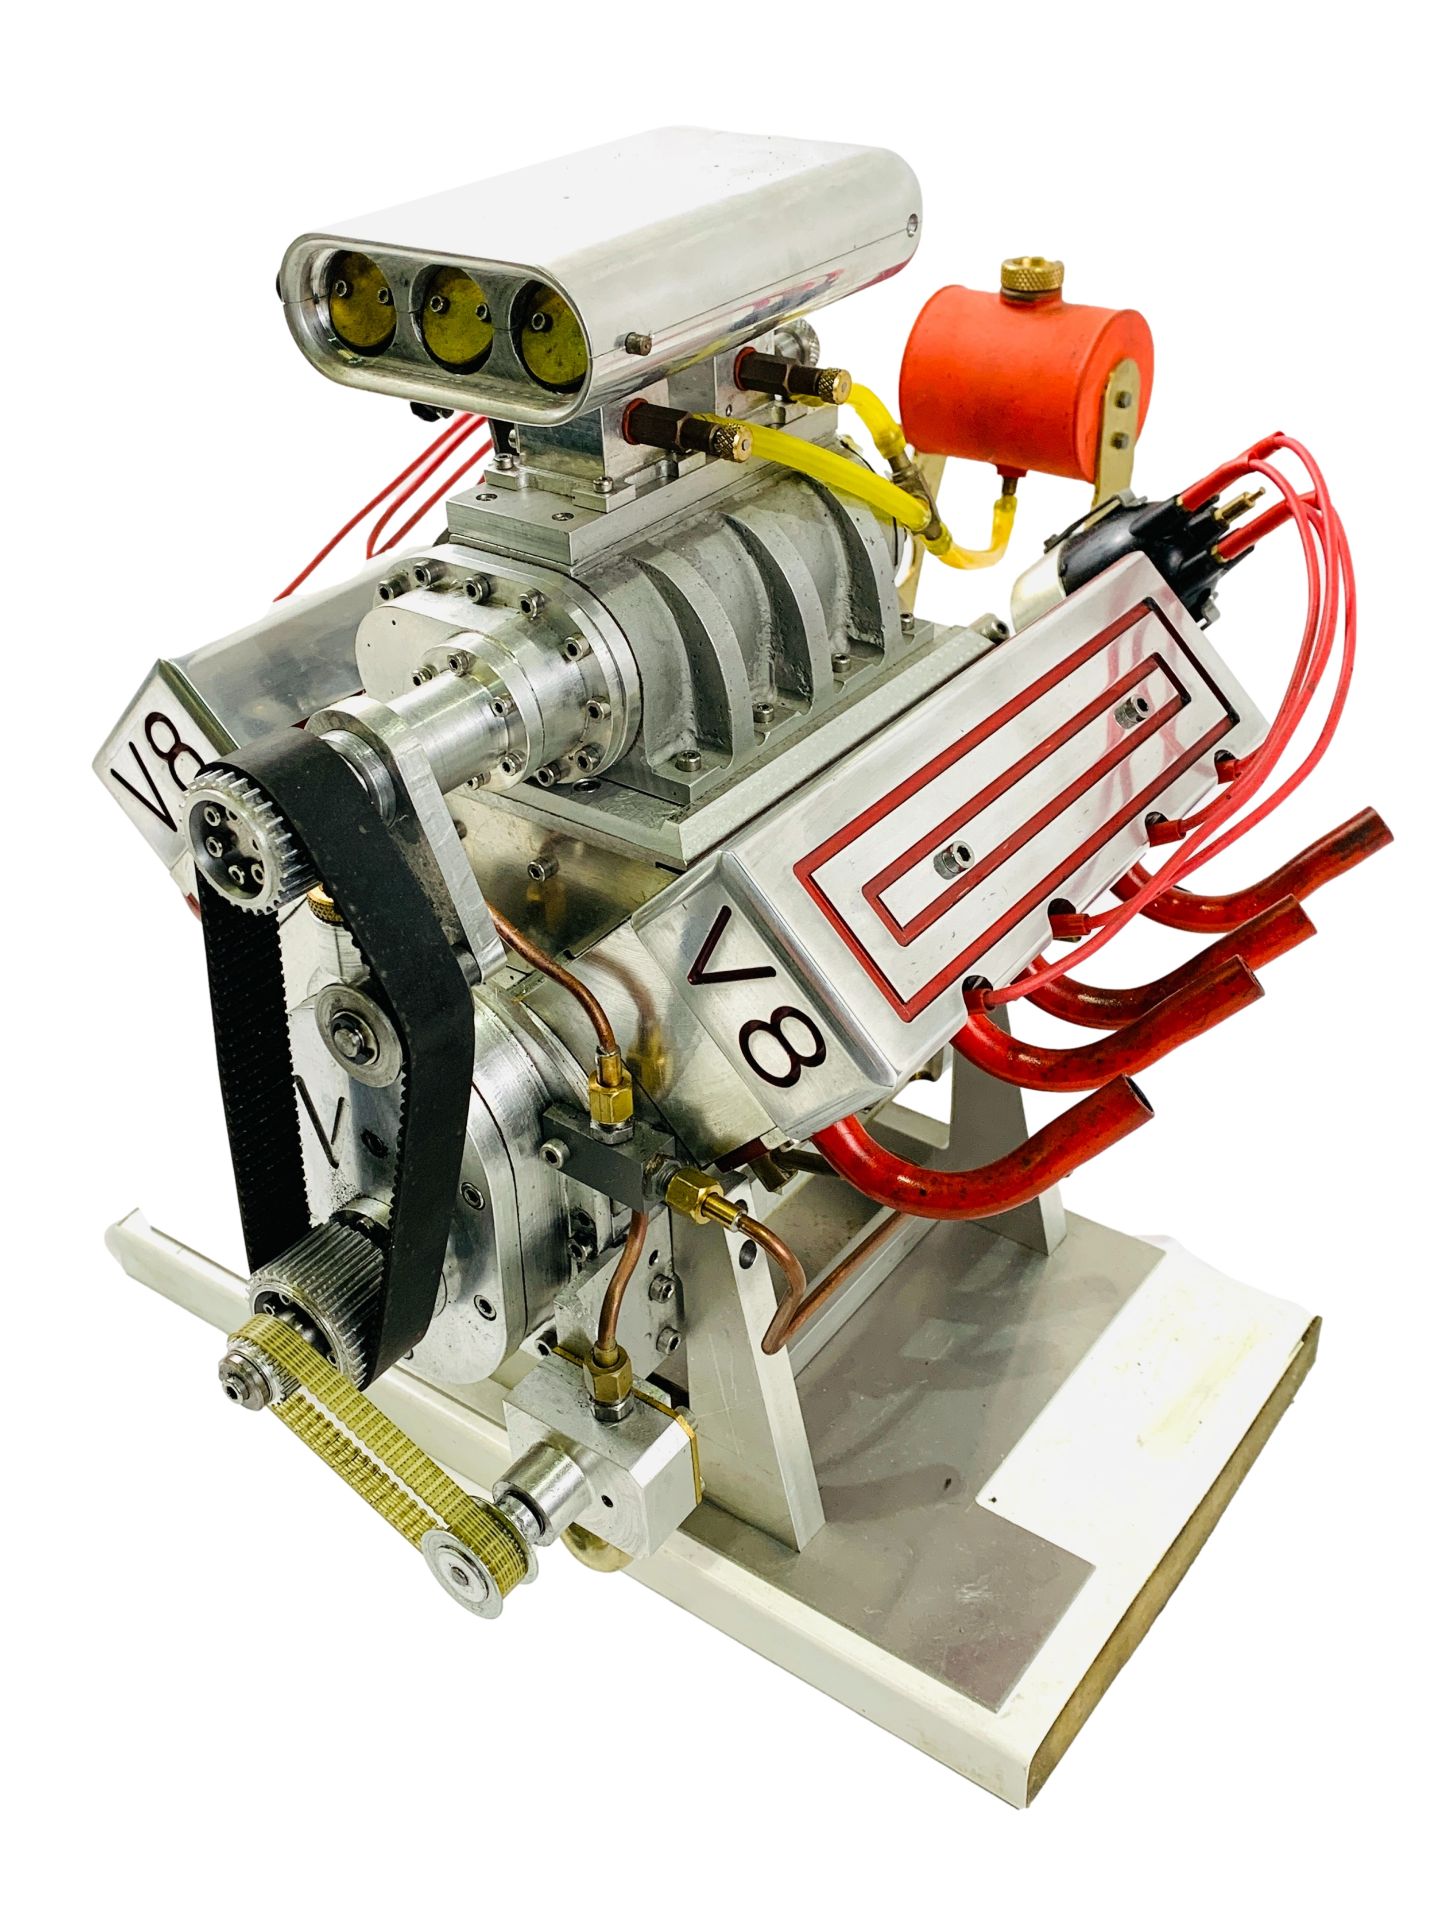 Model V8 engine by 'Willis Engineering'.